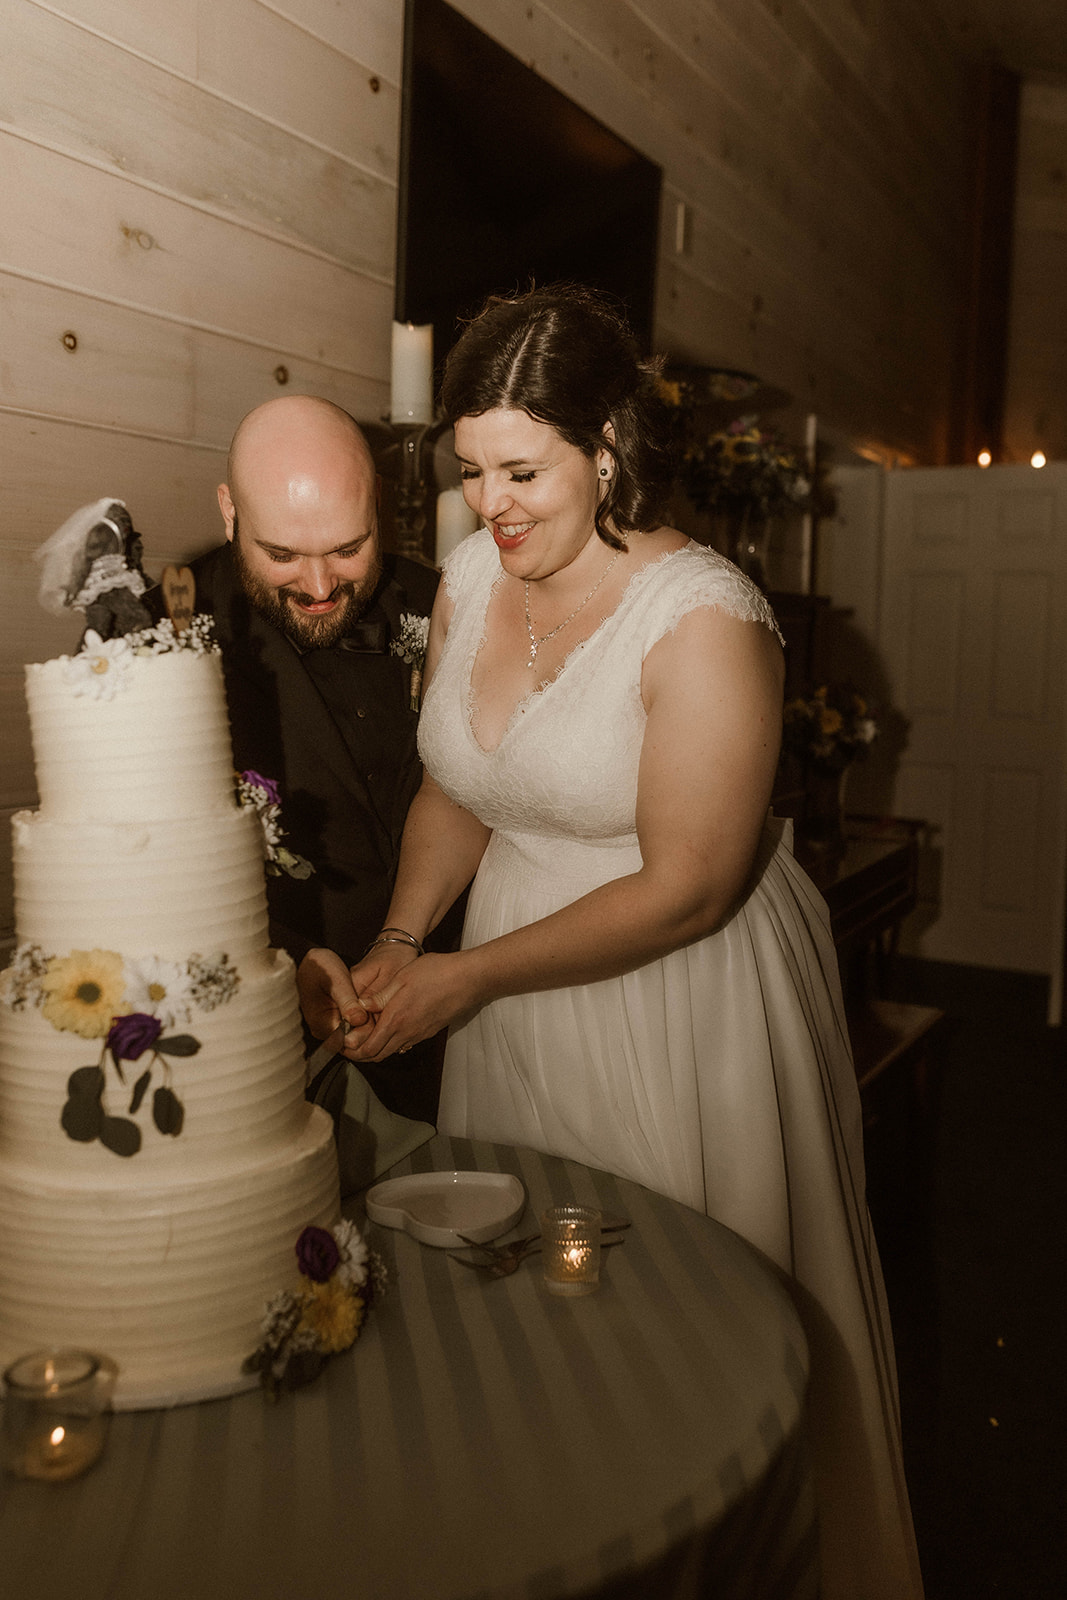 Bride and groom cut their wedding cake on their dreamy upstate New York wedding day